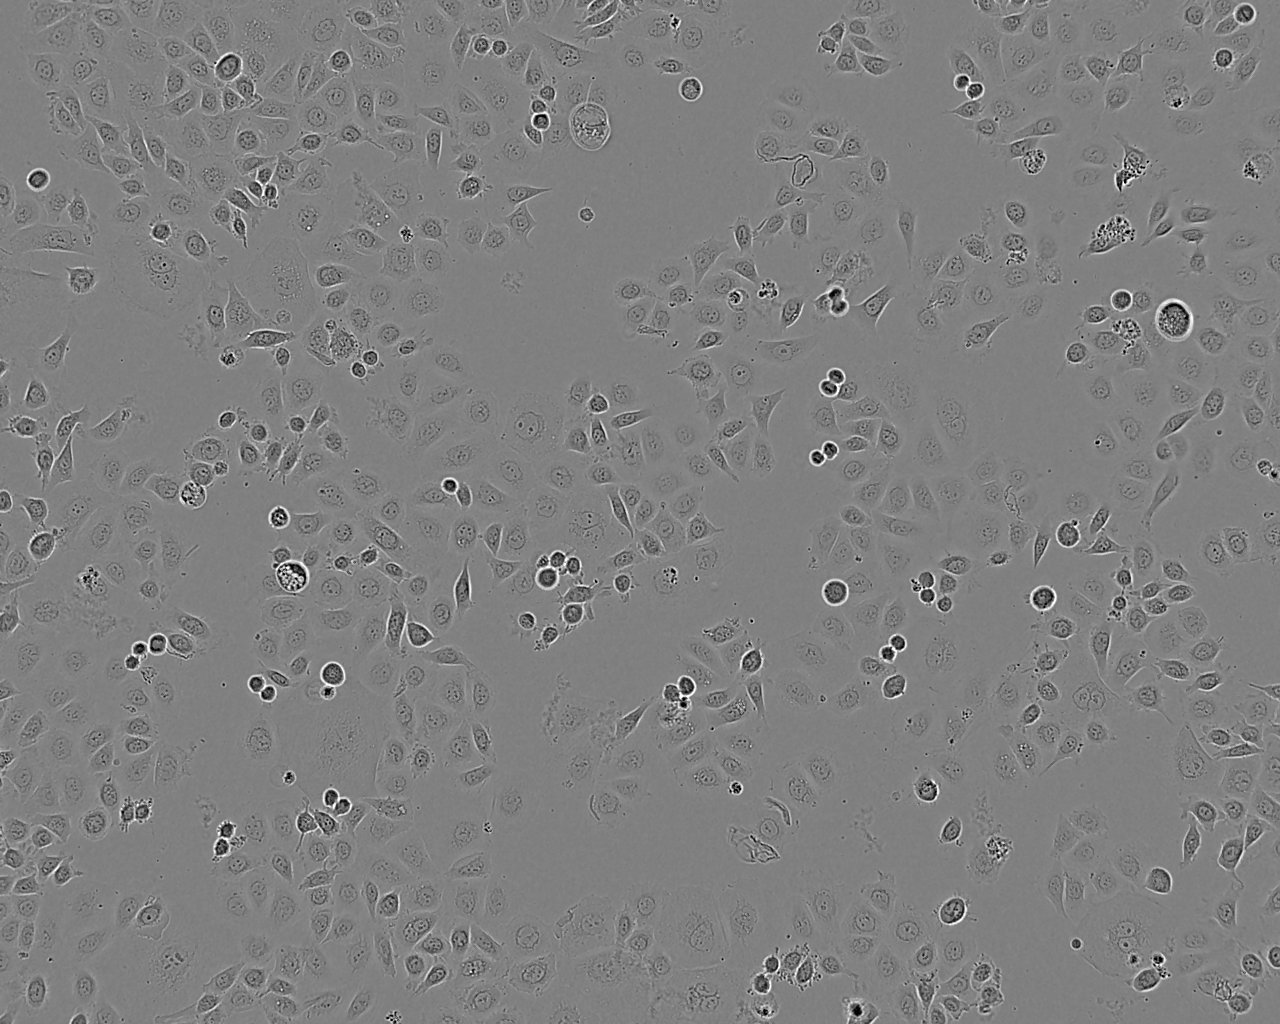 CW-2 epithelioid cells人结肠癌细胞系,CW-2 epithelioid cells